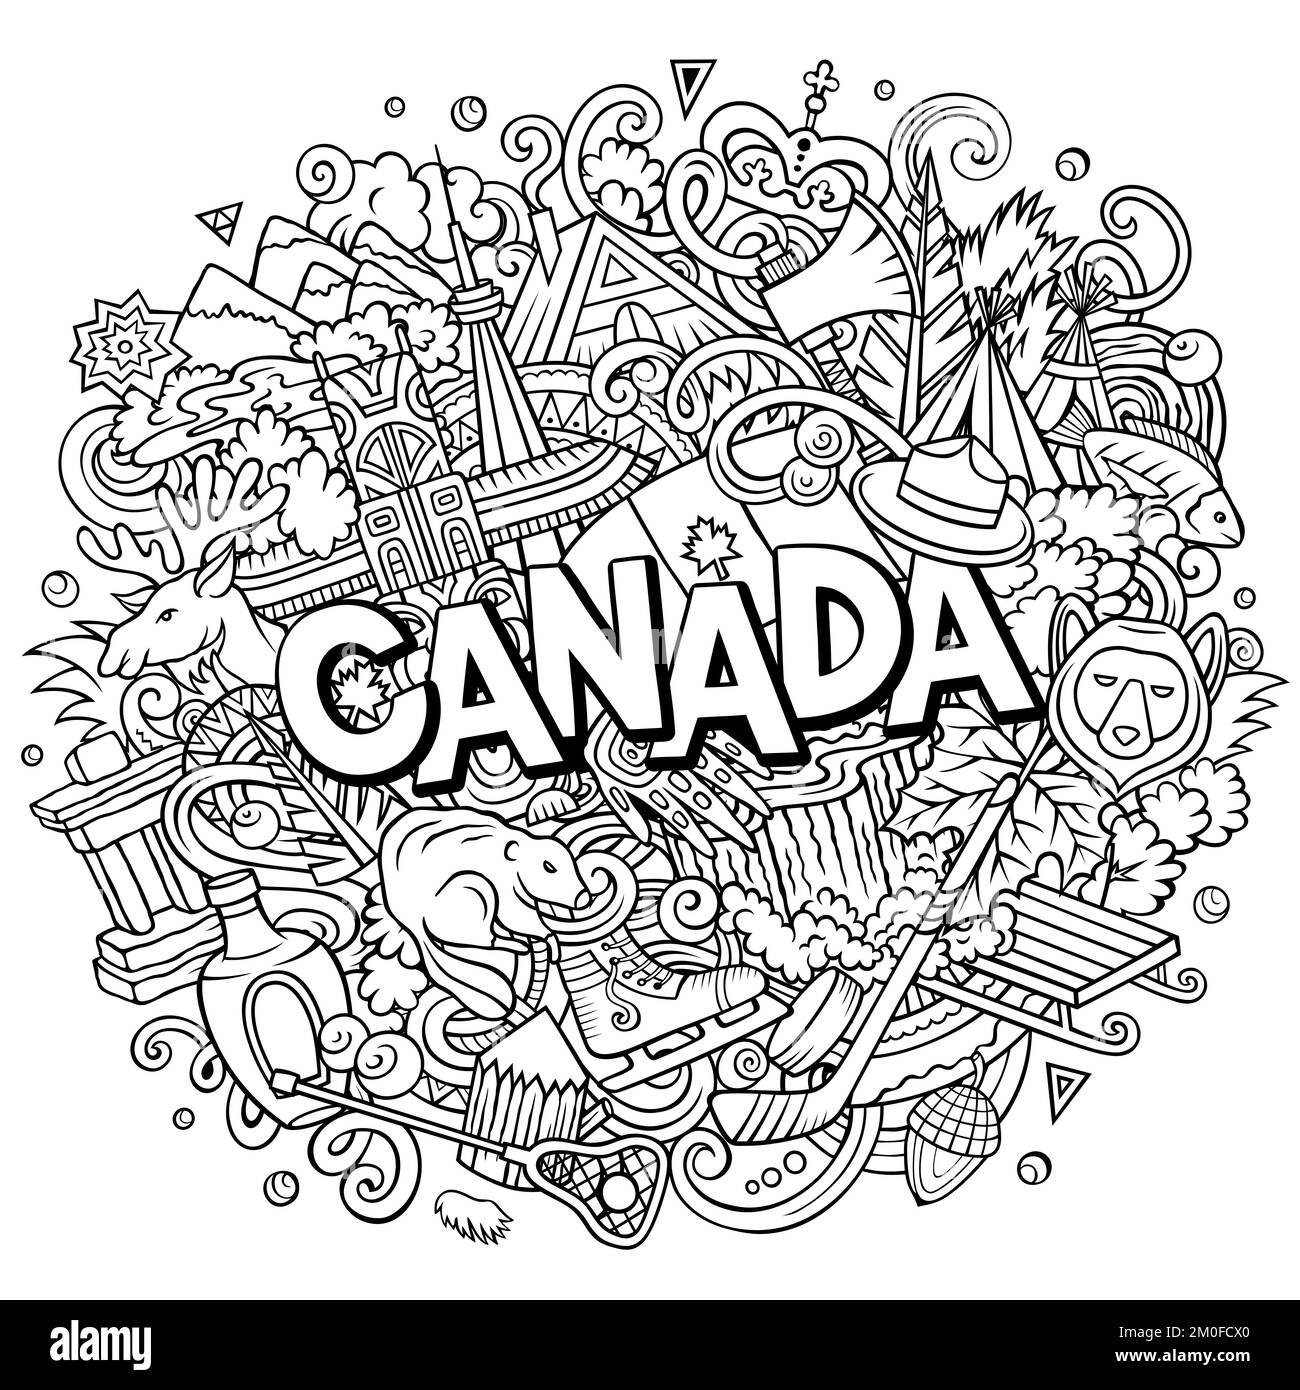 Canada cartoon doodle illustration. Funny Canadian design Stock Vector